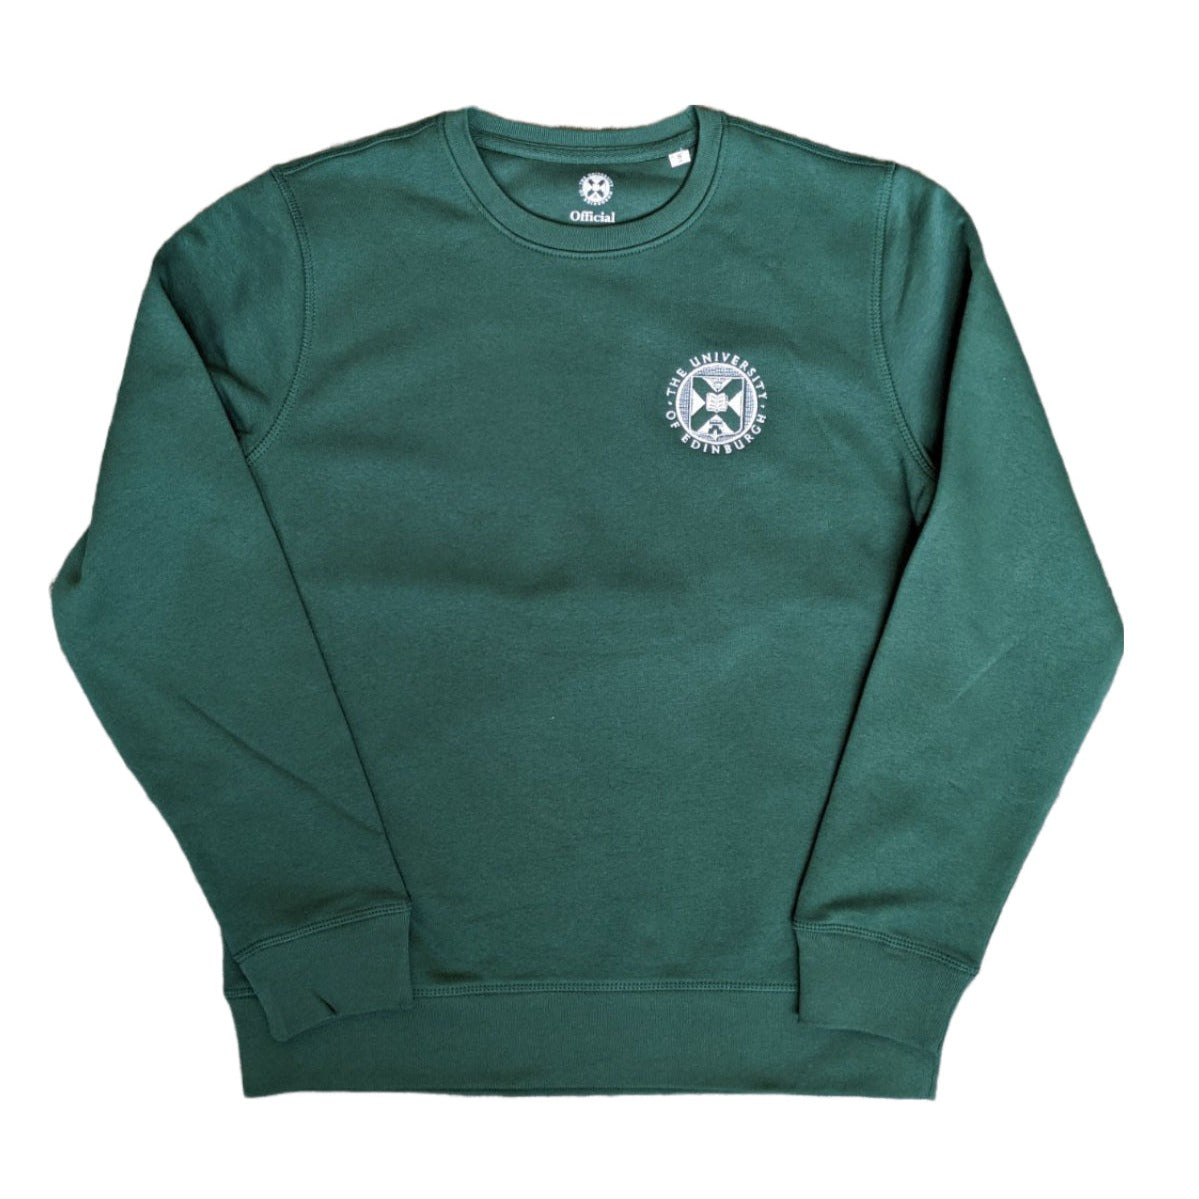 premium bottle green sweatshirt with white embroidered university crest 